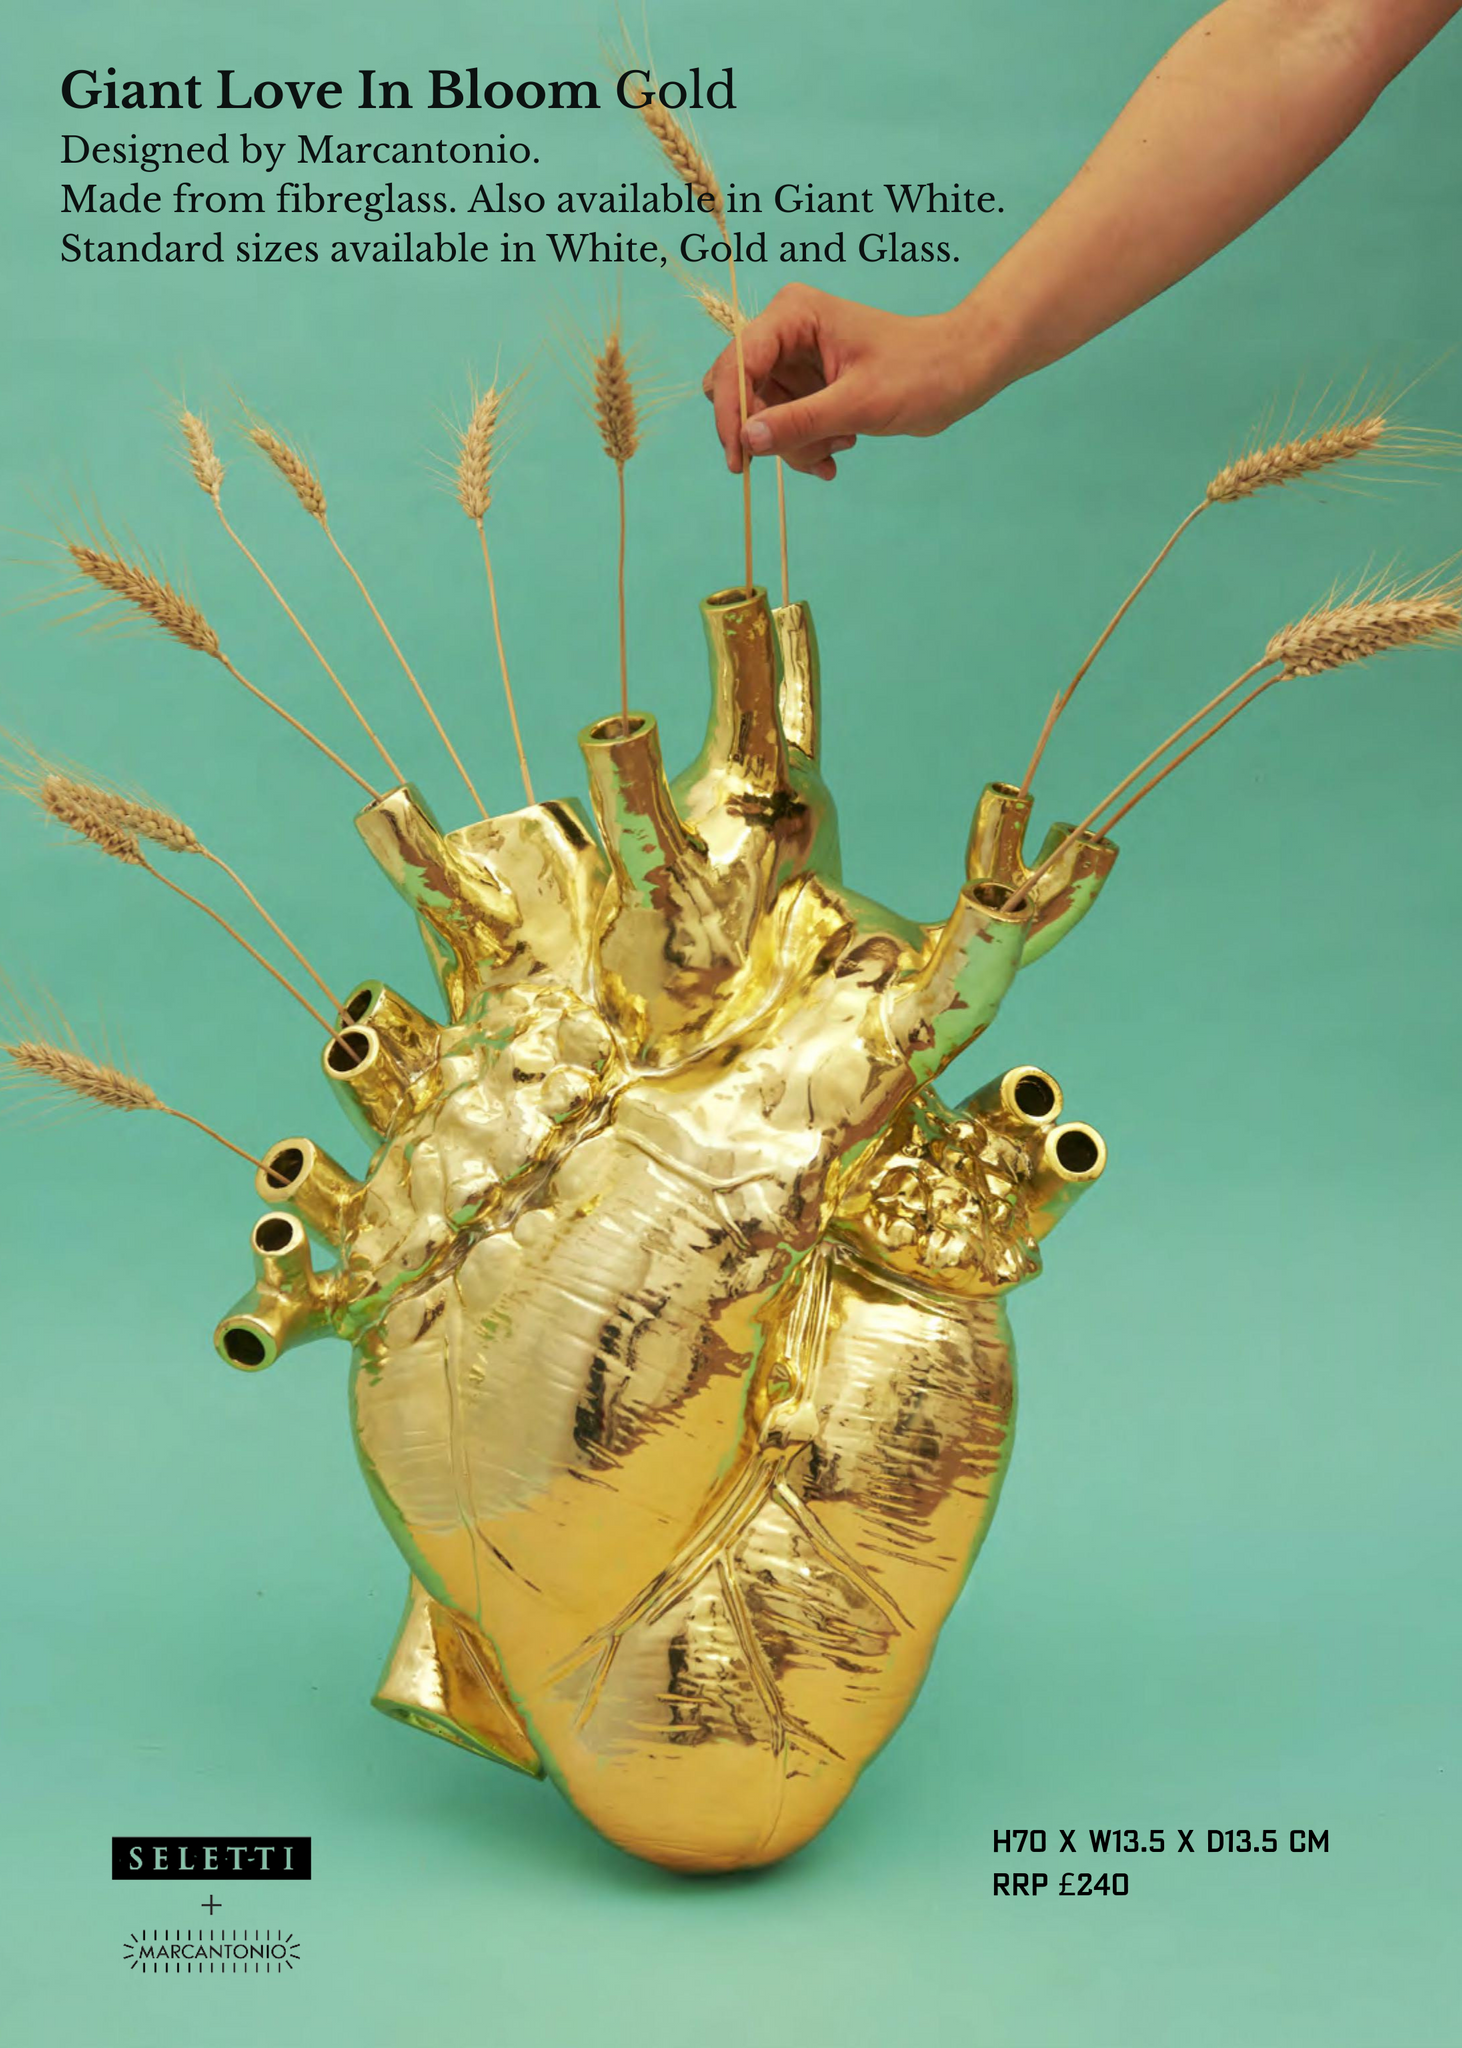 Seletti UK Love in Bloom by Marcantonio New Giant Gold Vase